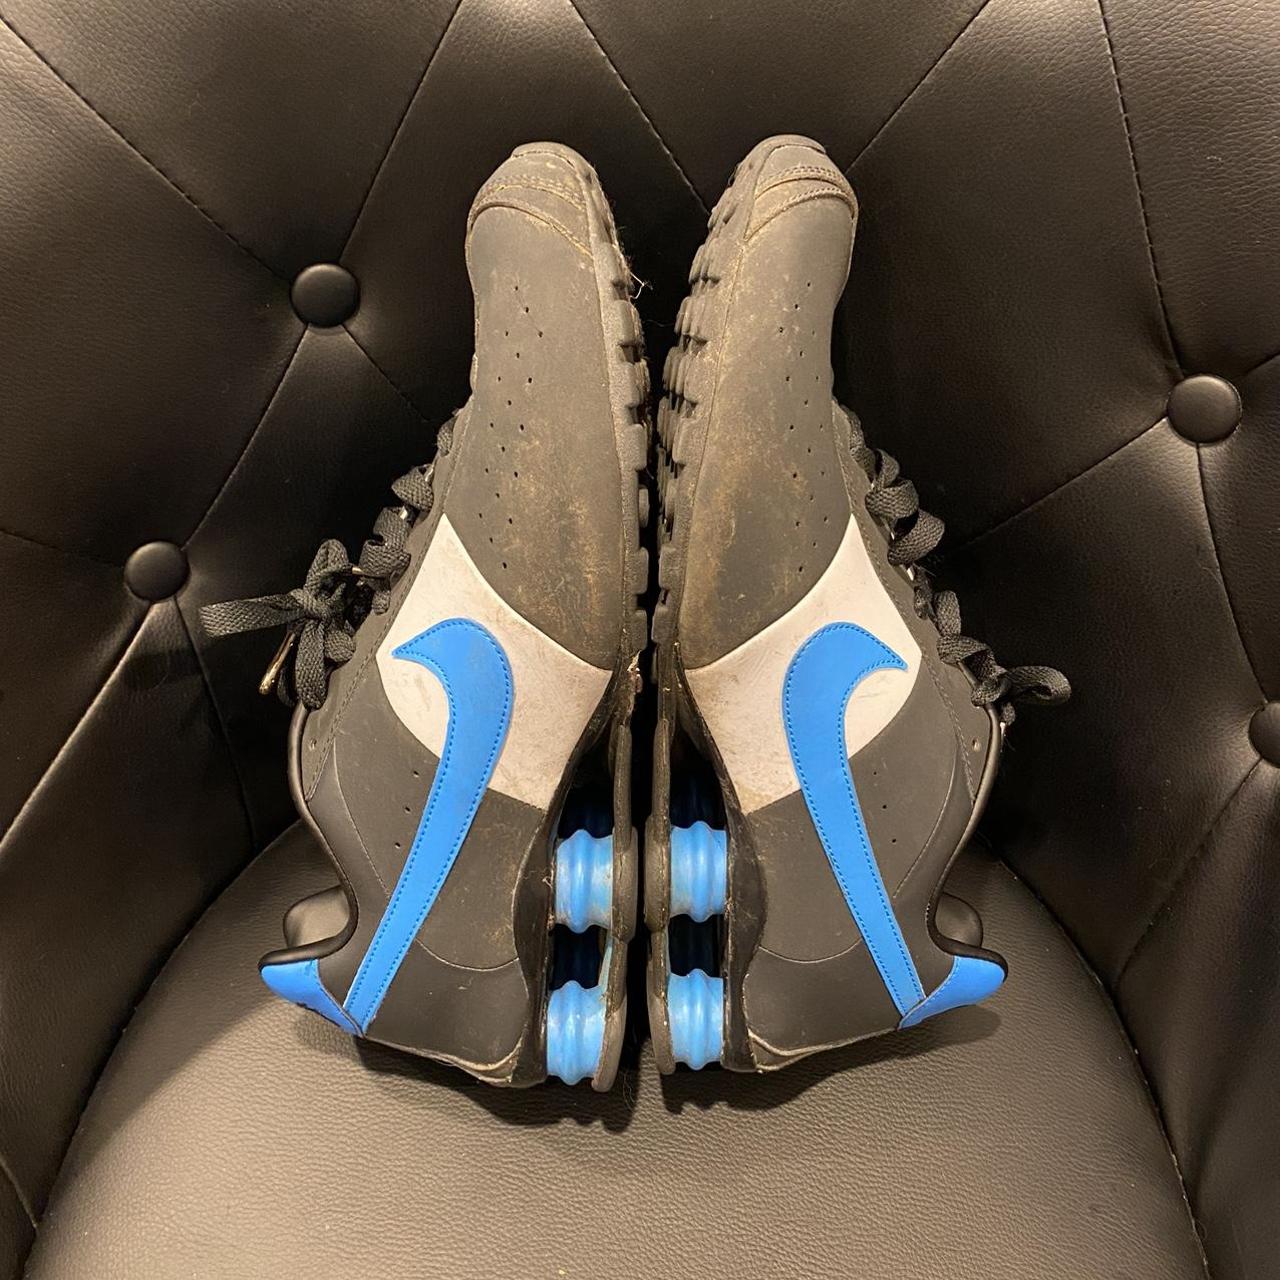 Product Image 3 - Nike Shox Coal/Blue Size 11

These